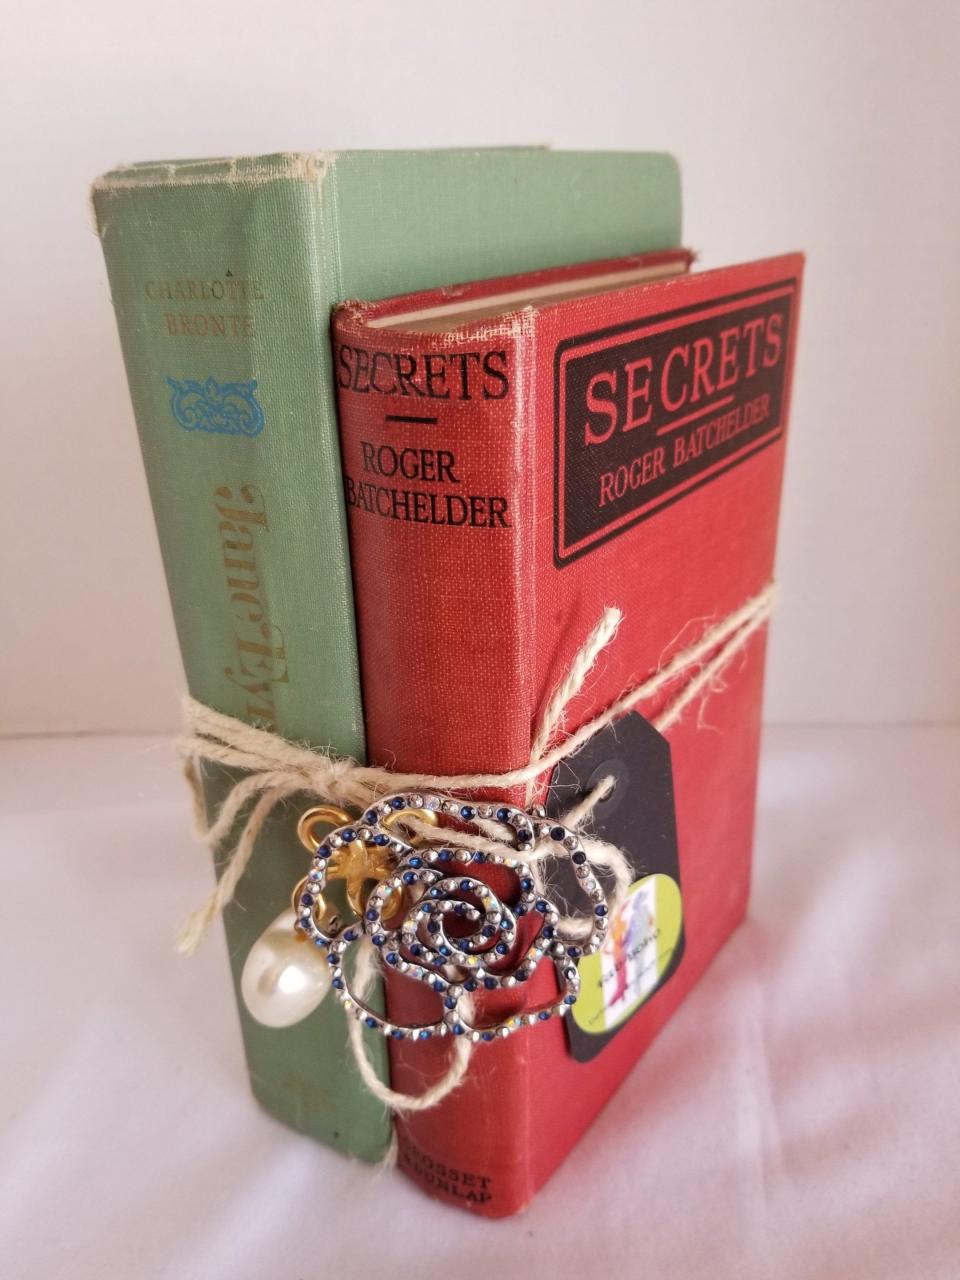 VINTAGE COLLECTABLE BOOKS 2 Novels "Jane Eyre" "Secrets" Hard Covers